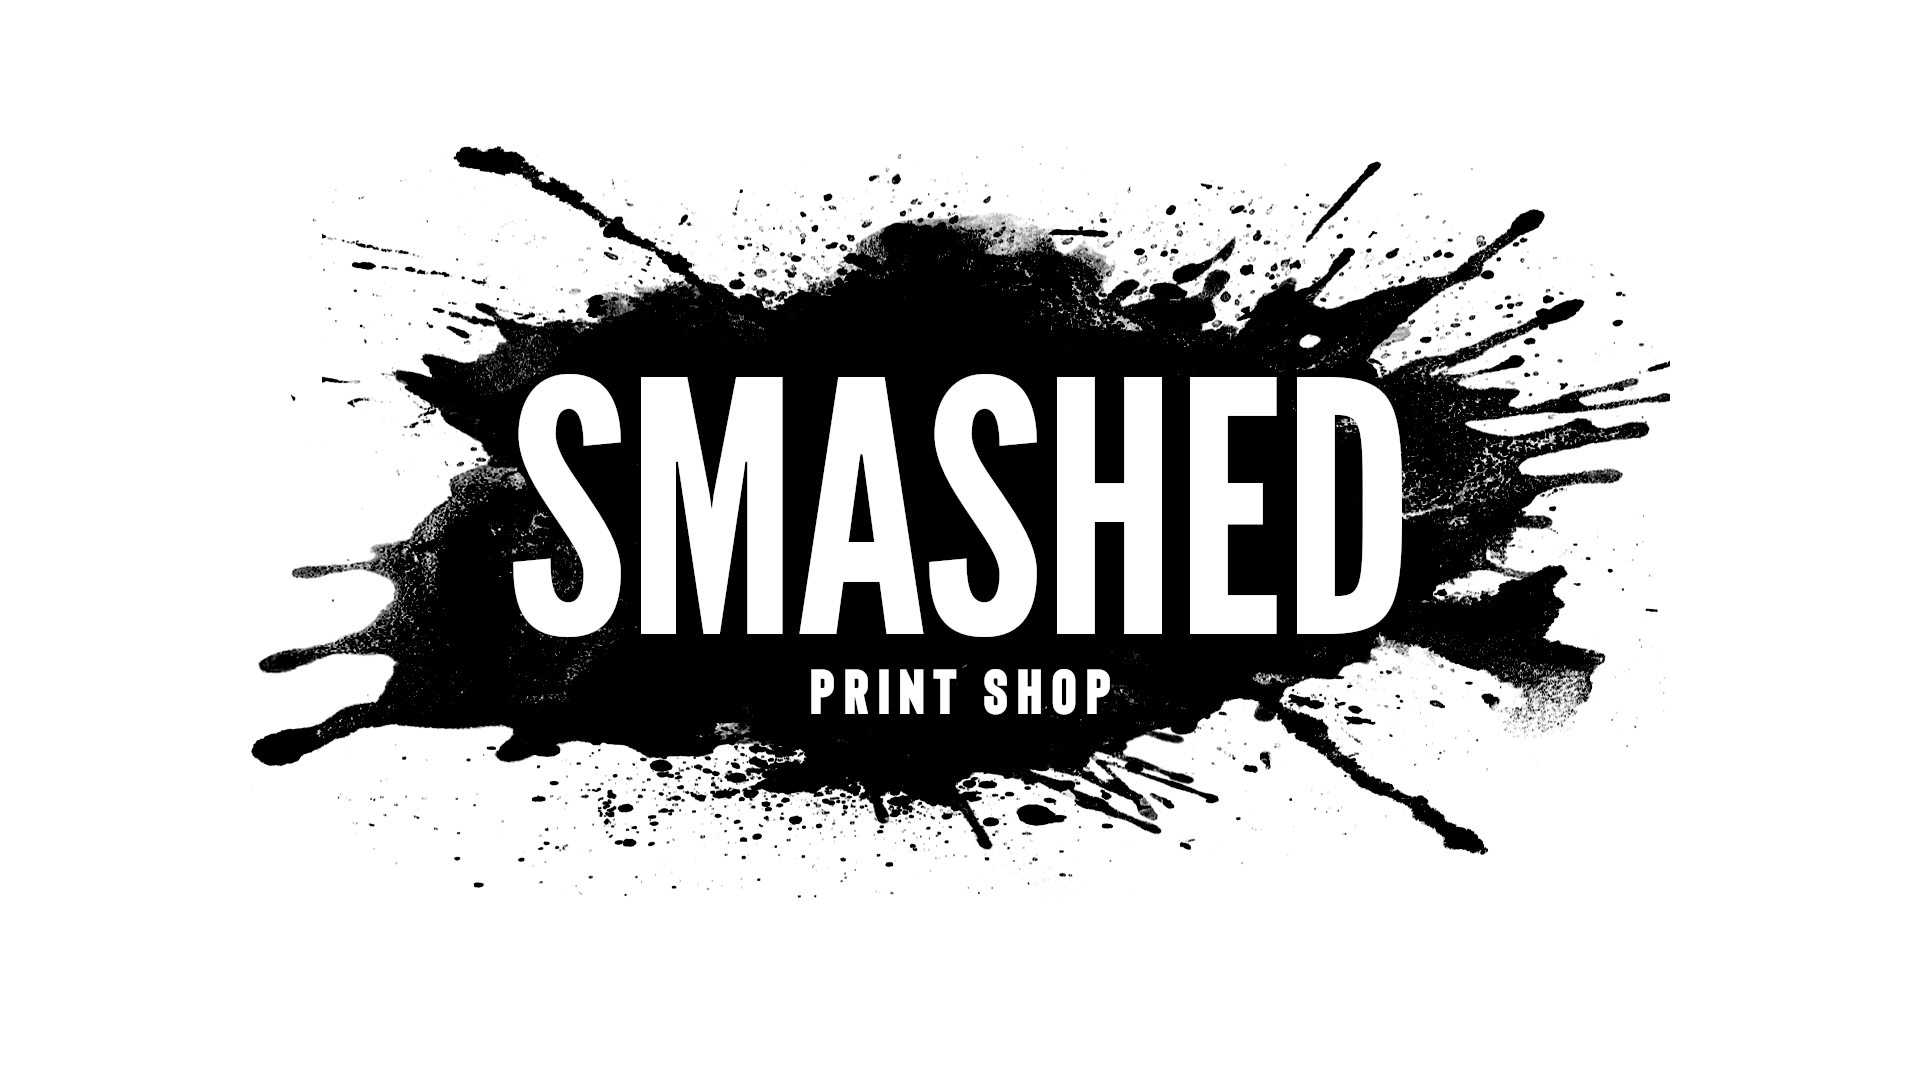 Smashed Print Shop LLC